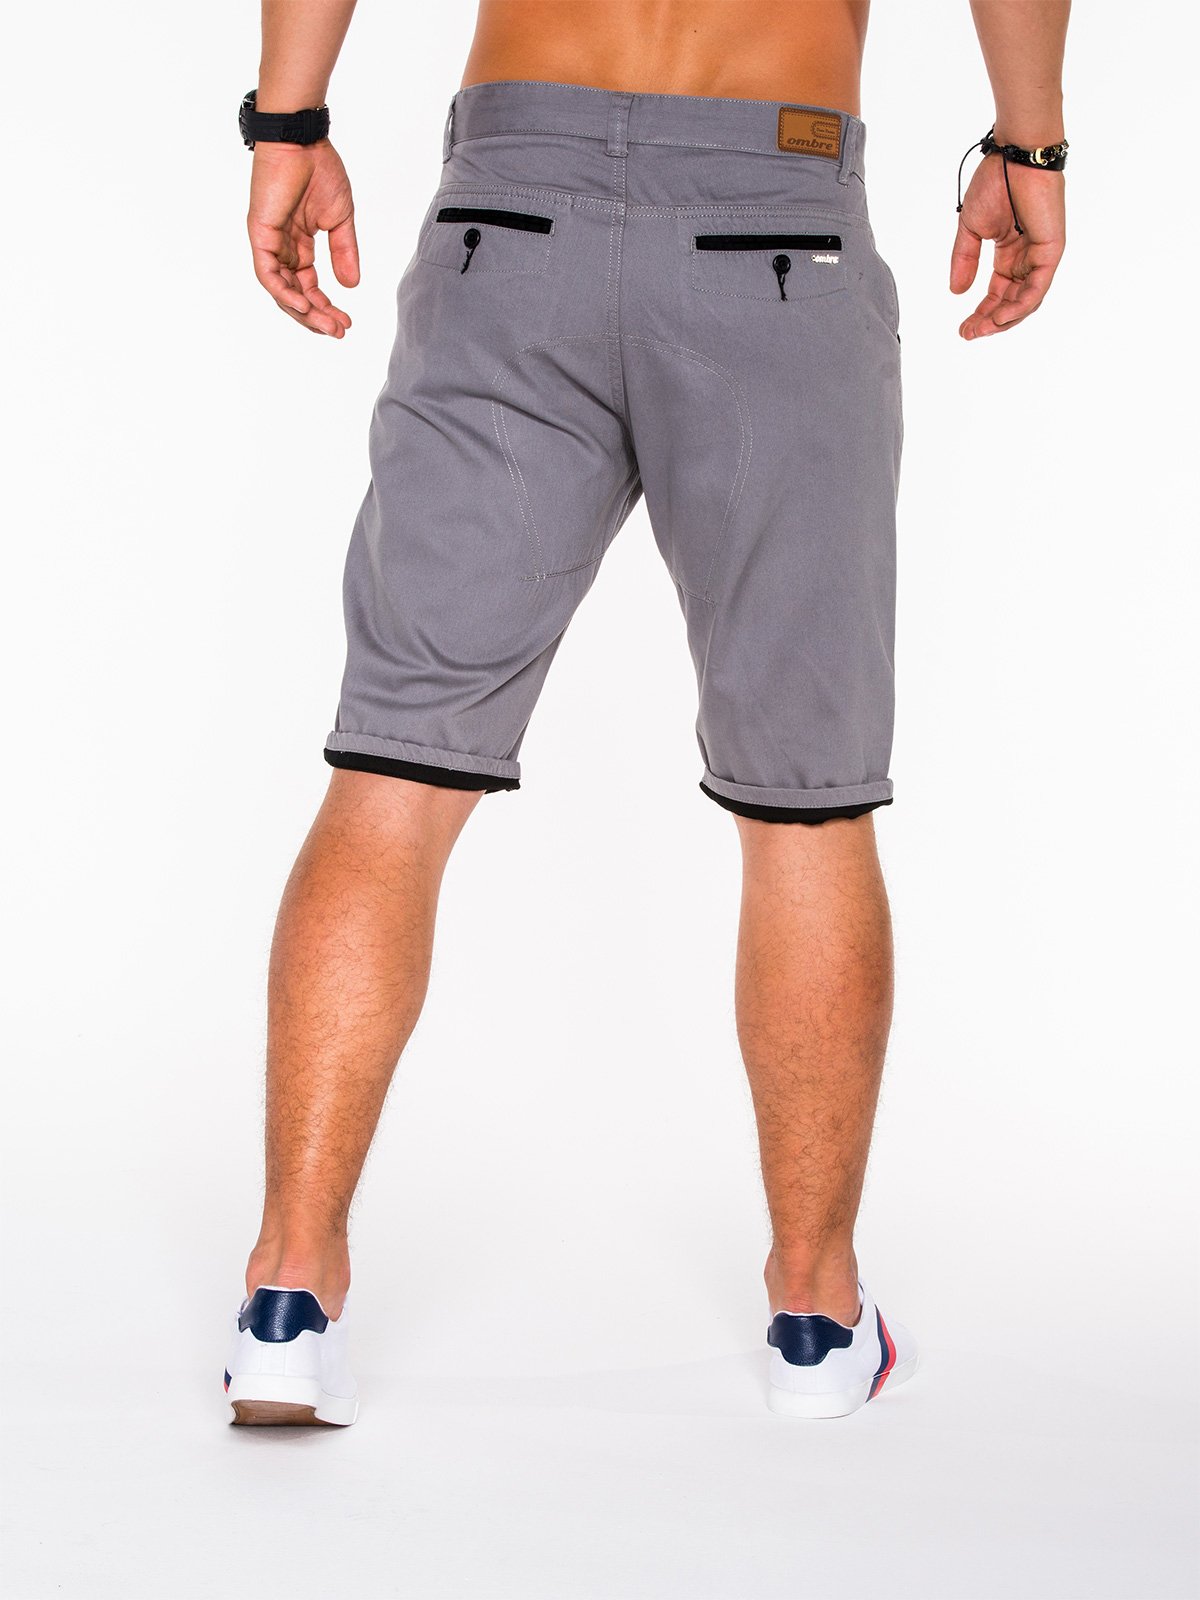 Men's chino shorts P520 - grey | MODONE wholesale - Clothing For Men